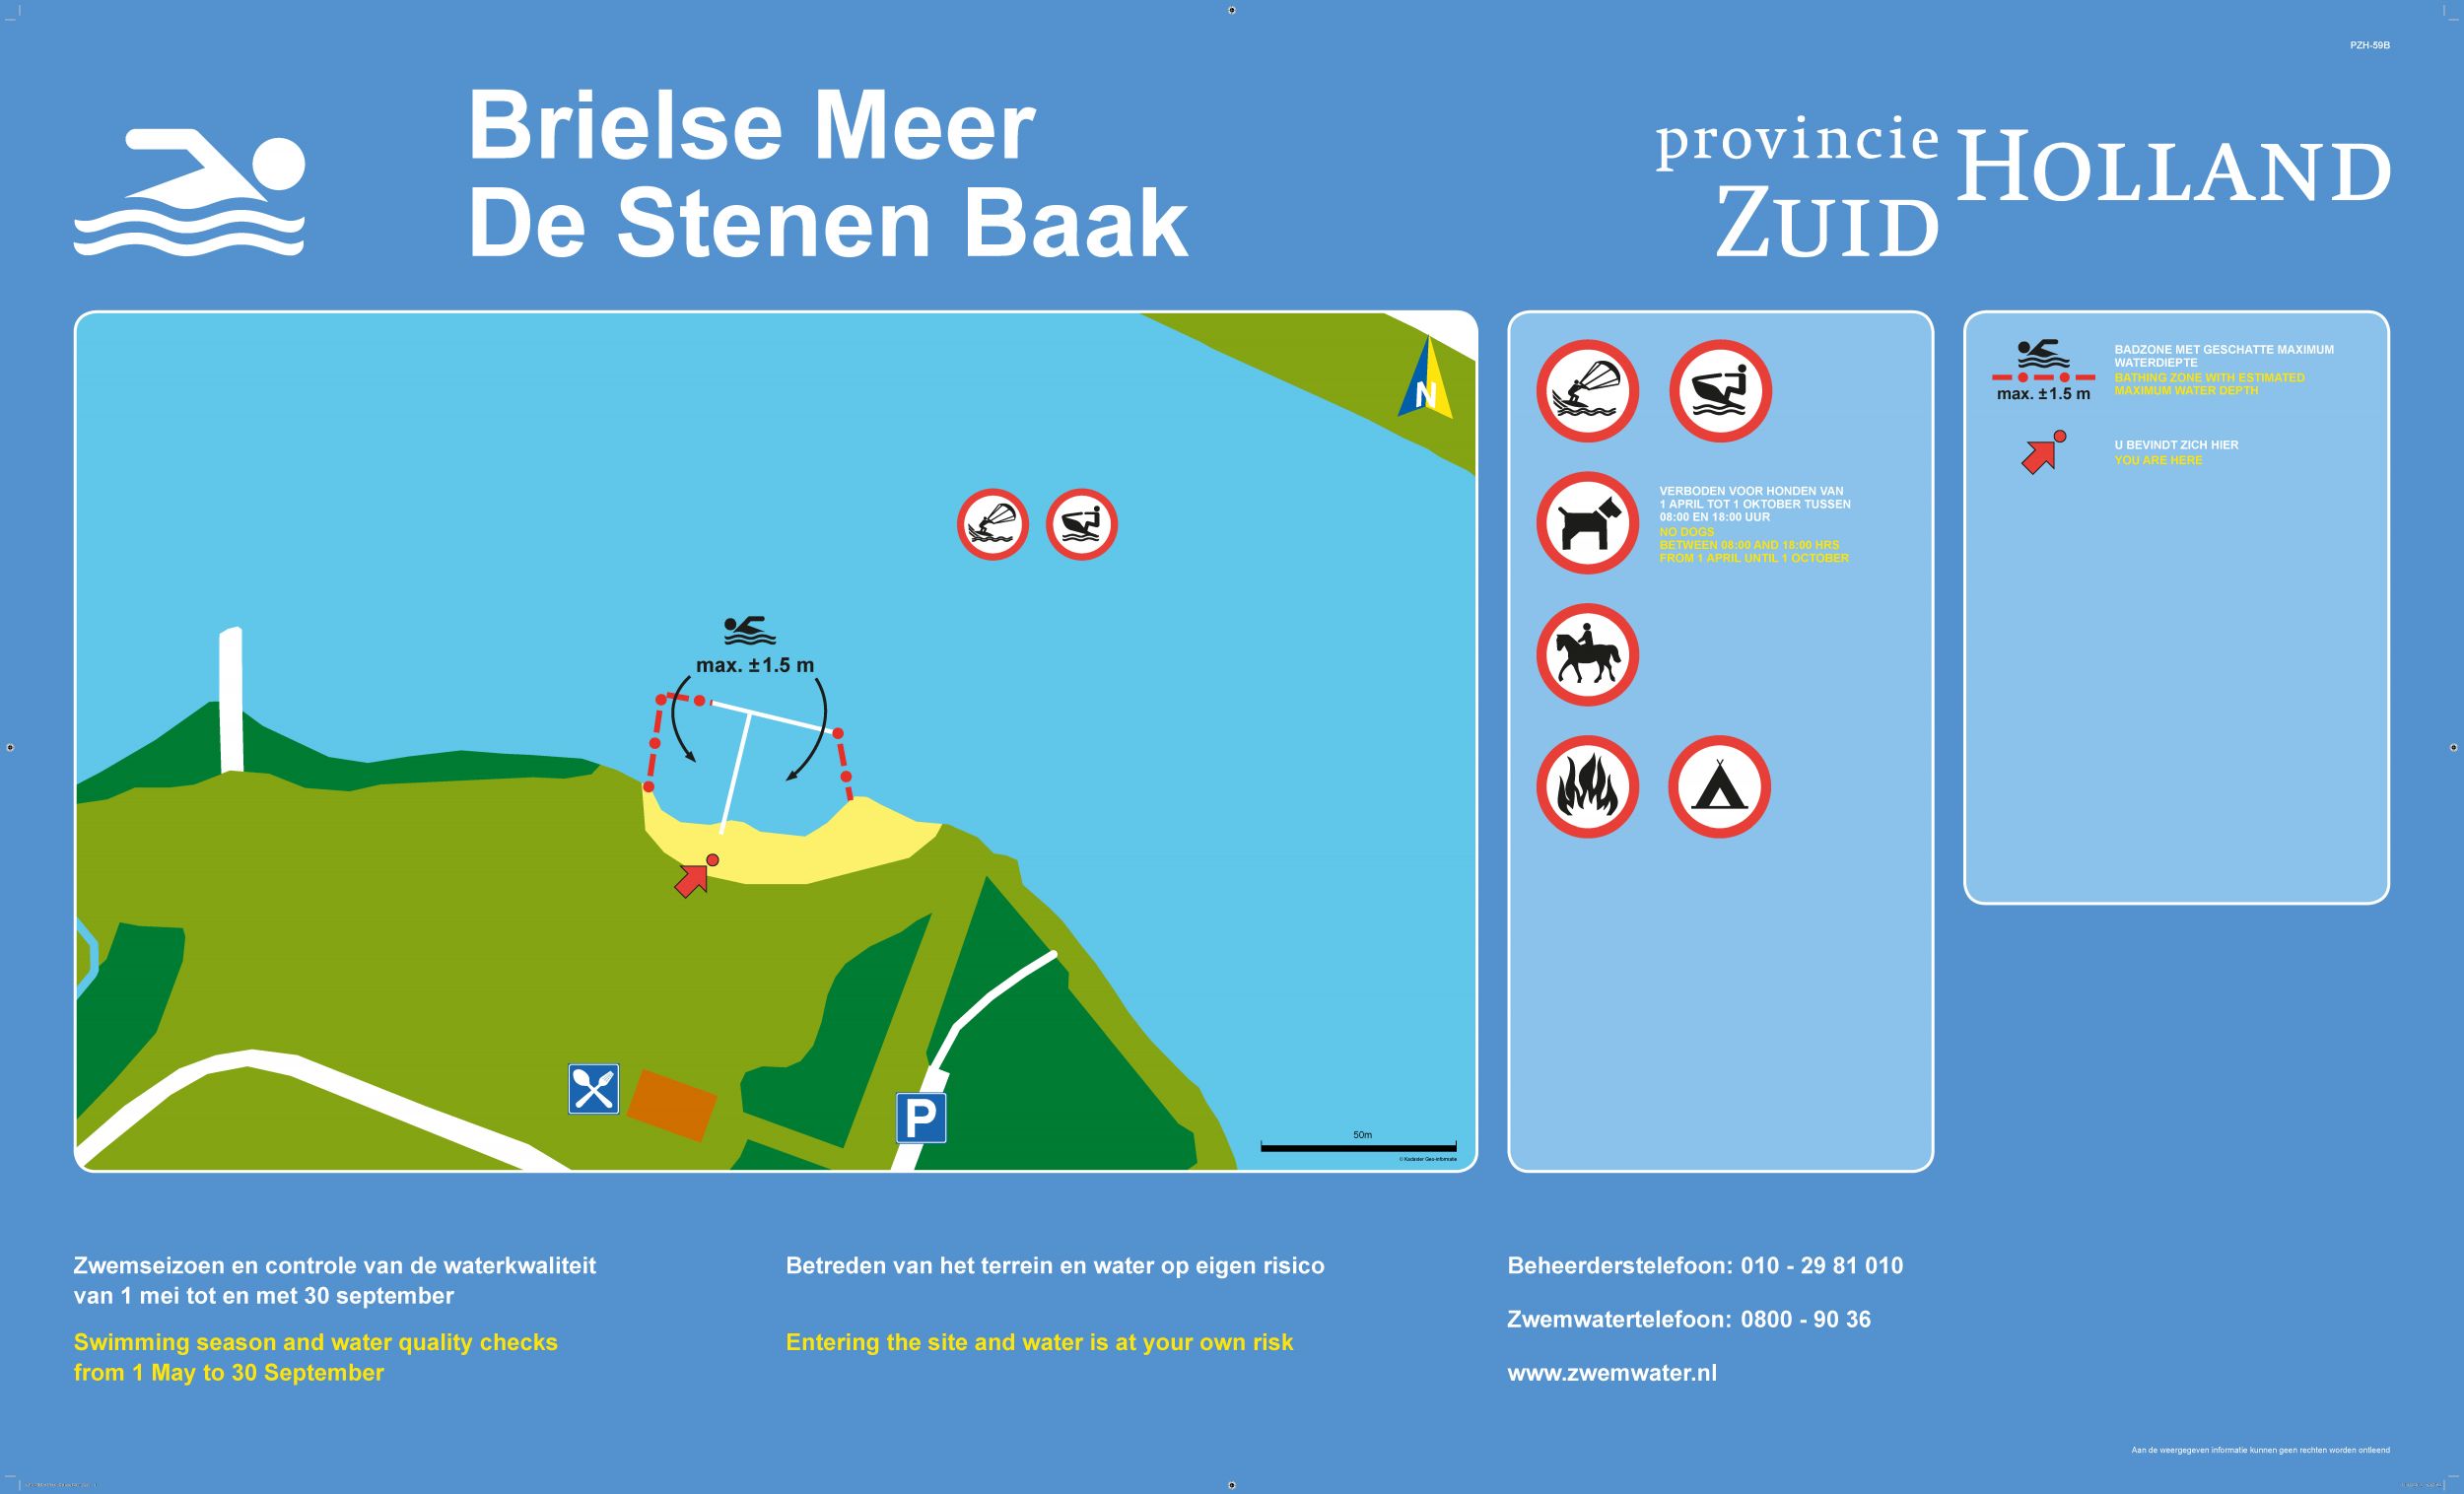 The information board at the swimming location Brielse Meer De Stenen Baak